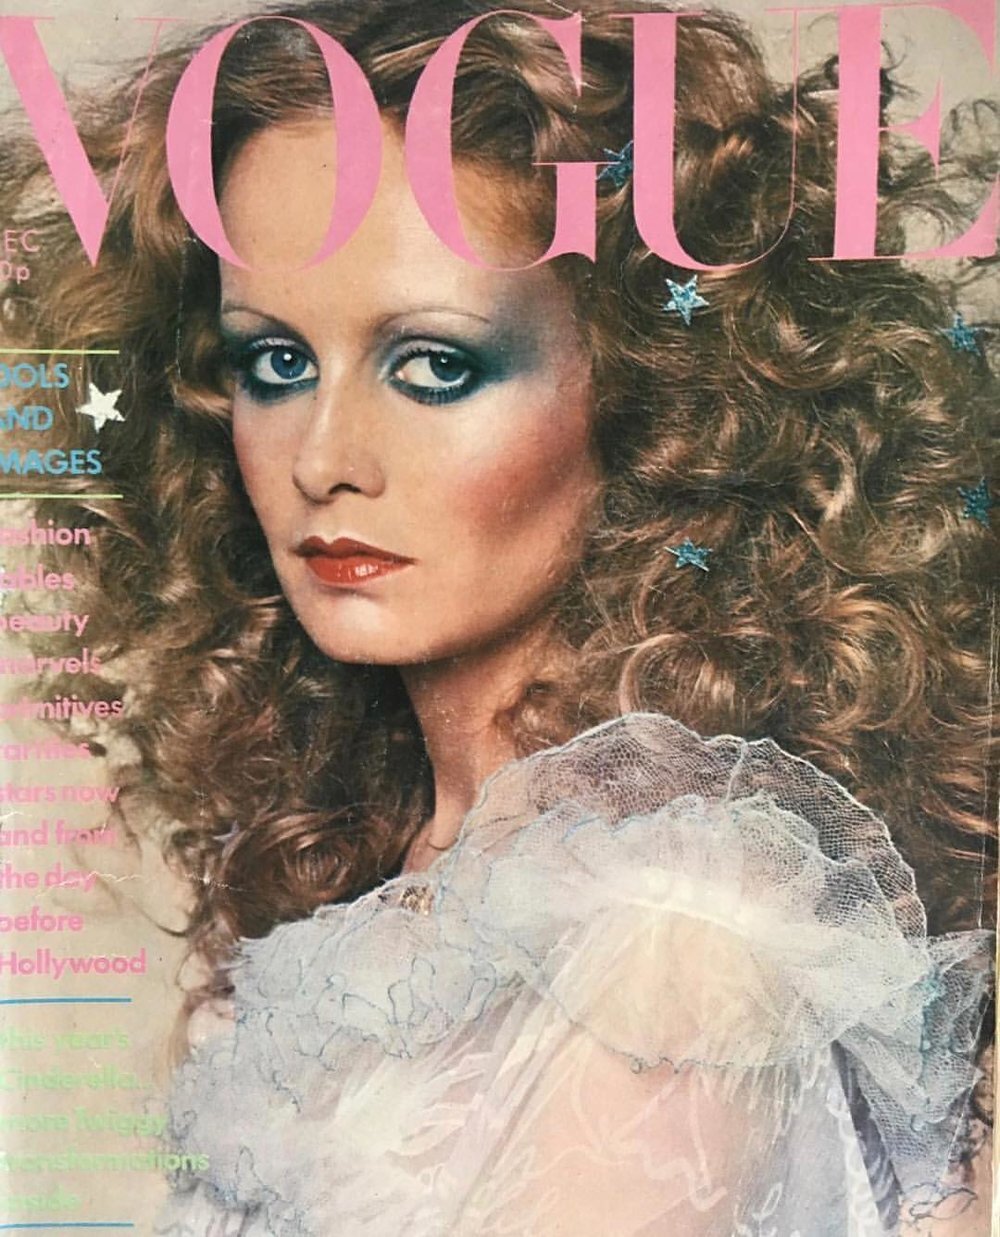 Twiggy+shot+by+Barry+Lategan+for+Vogue,+Dec.+1974;+wearing+Zandra+Rhodes,+makeup+by+Barbara+Daly.+.jpg